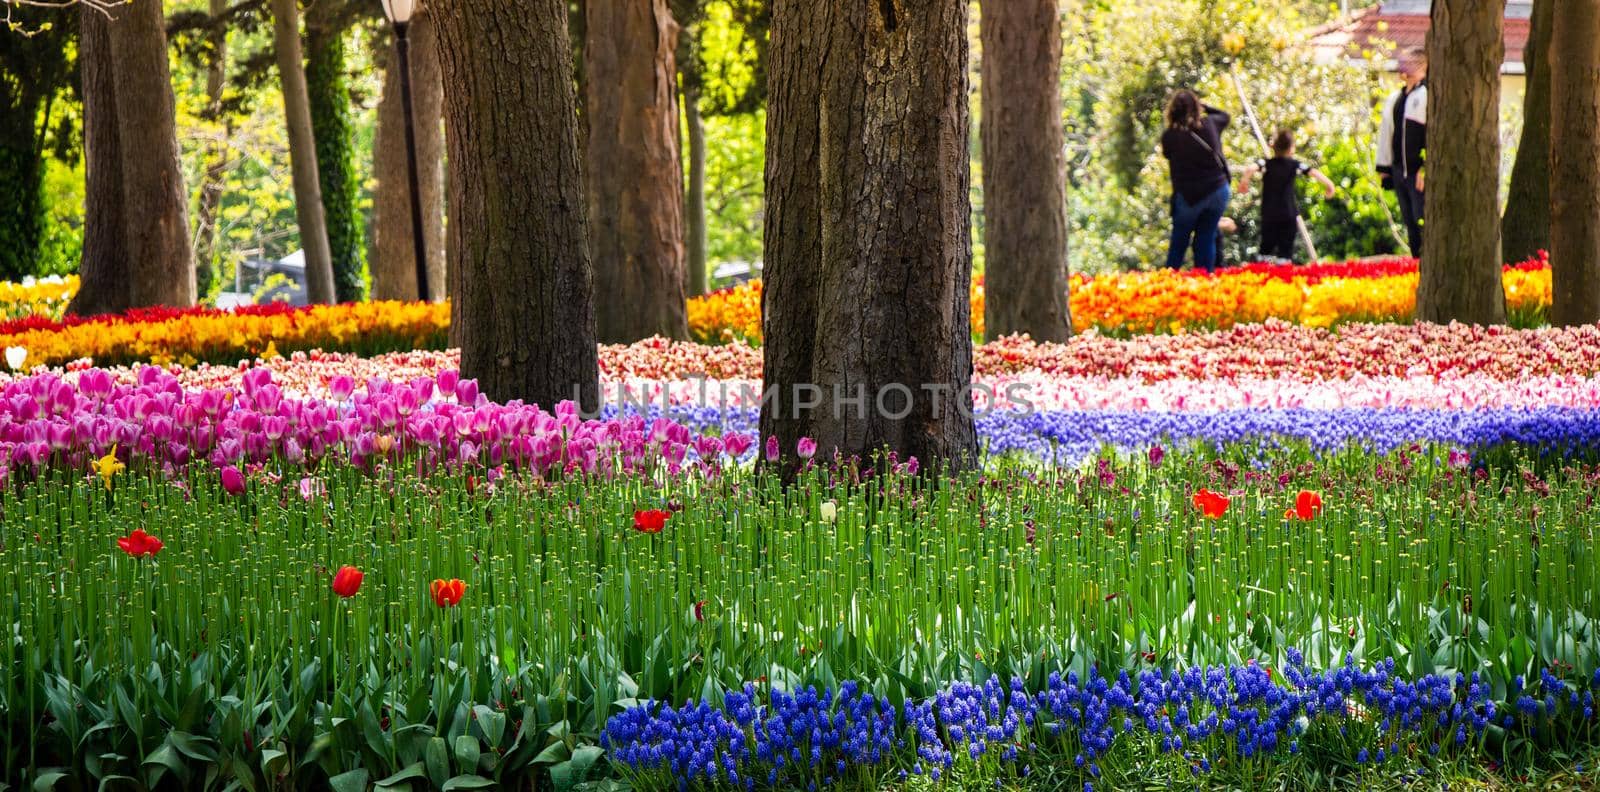 Blooming tulip flowers and trees in spring garden by berkay